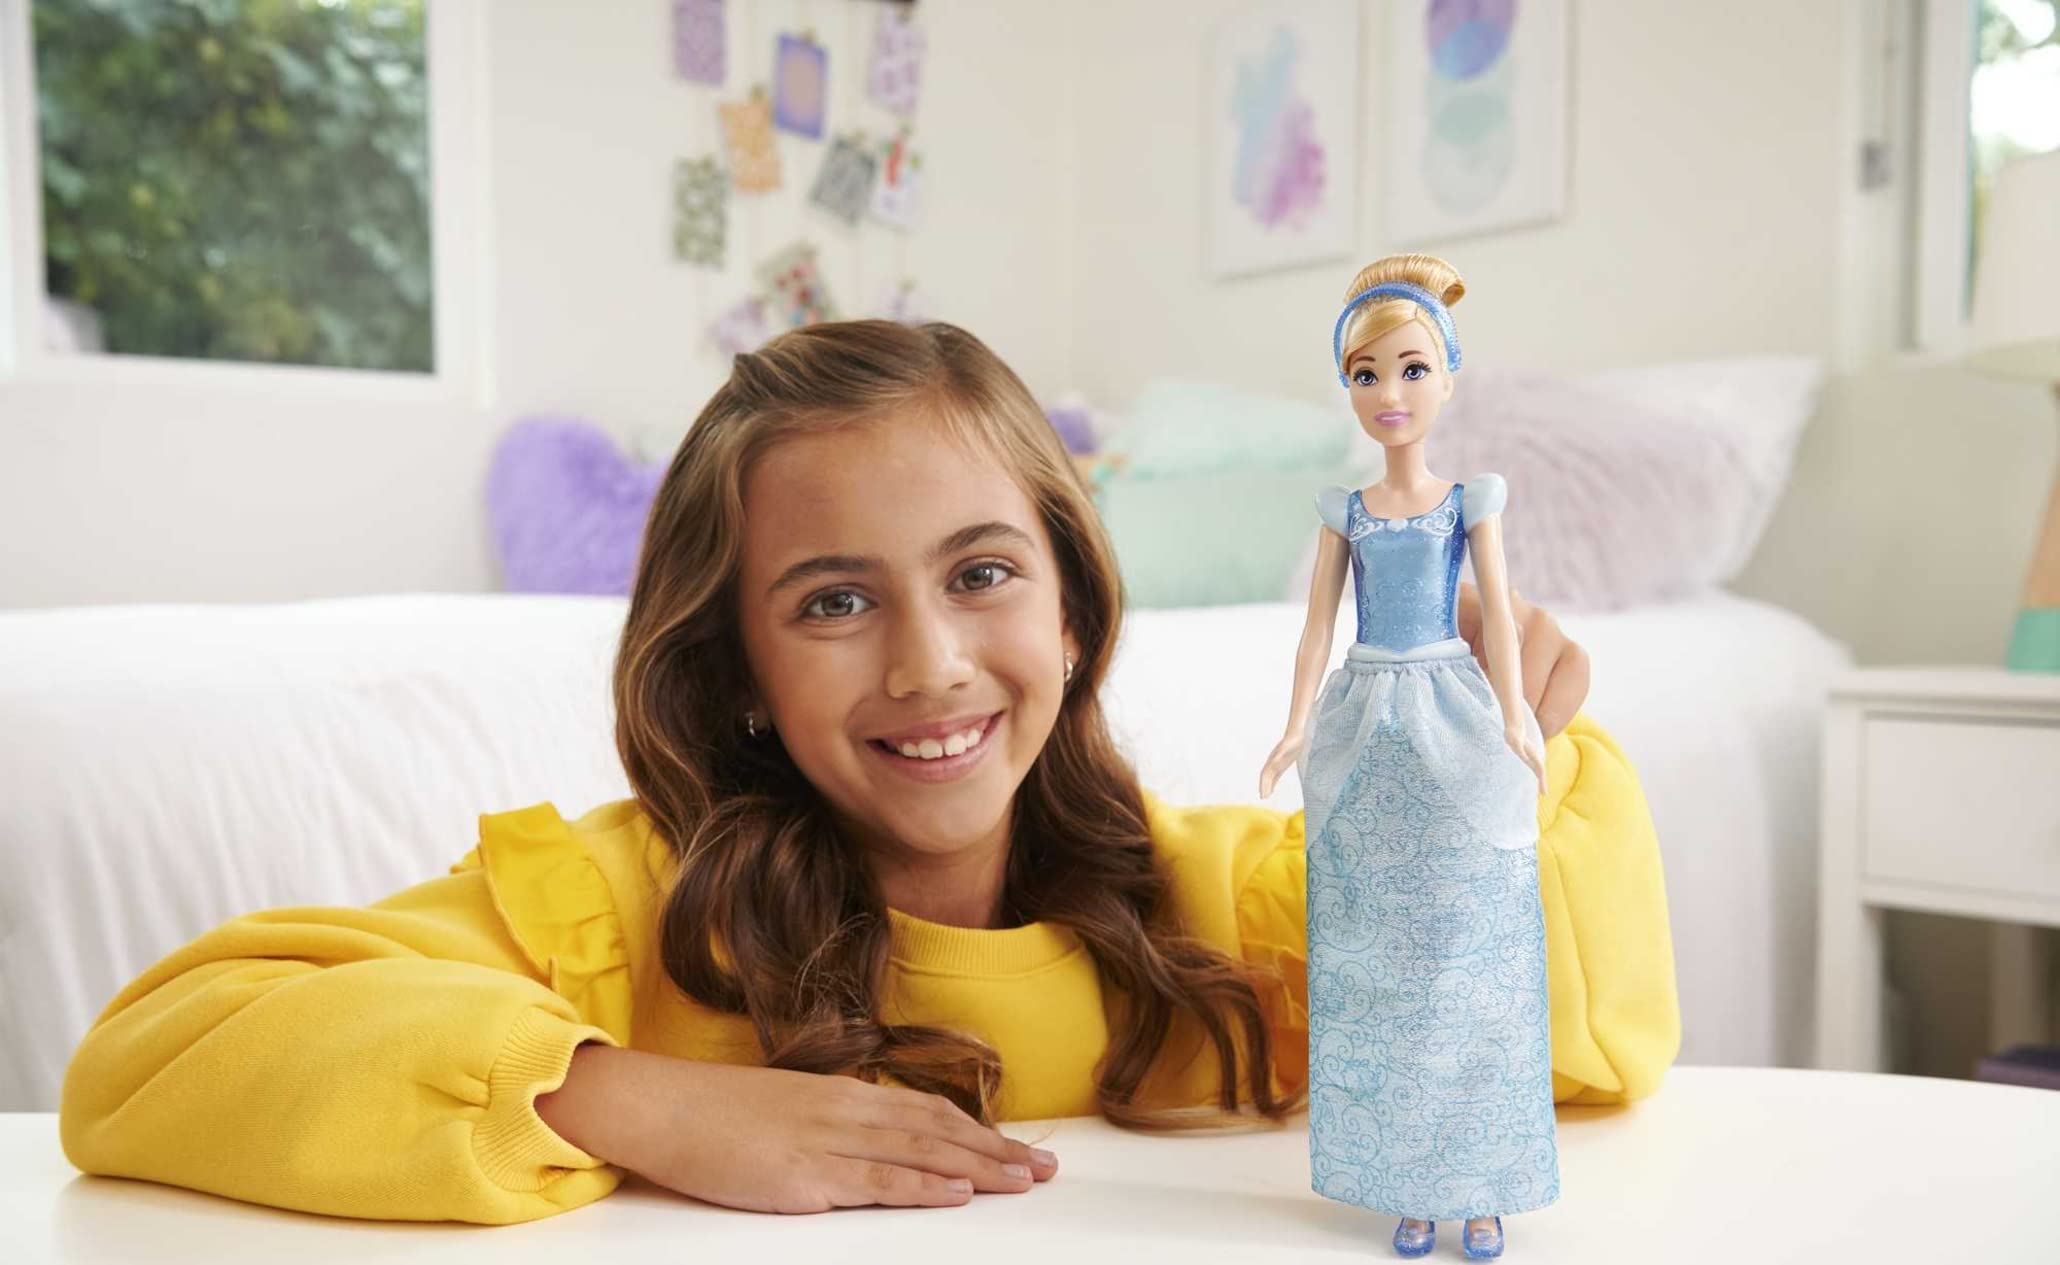 Mattel Disney Princess Cinderella Fashion Doll, Sparkling Look with Blonde Hair, Blue Eyes & Hair Accessory